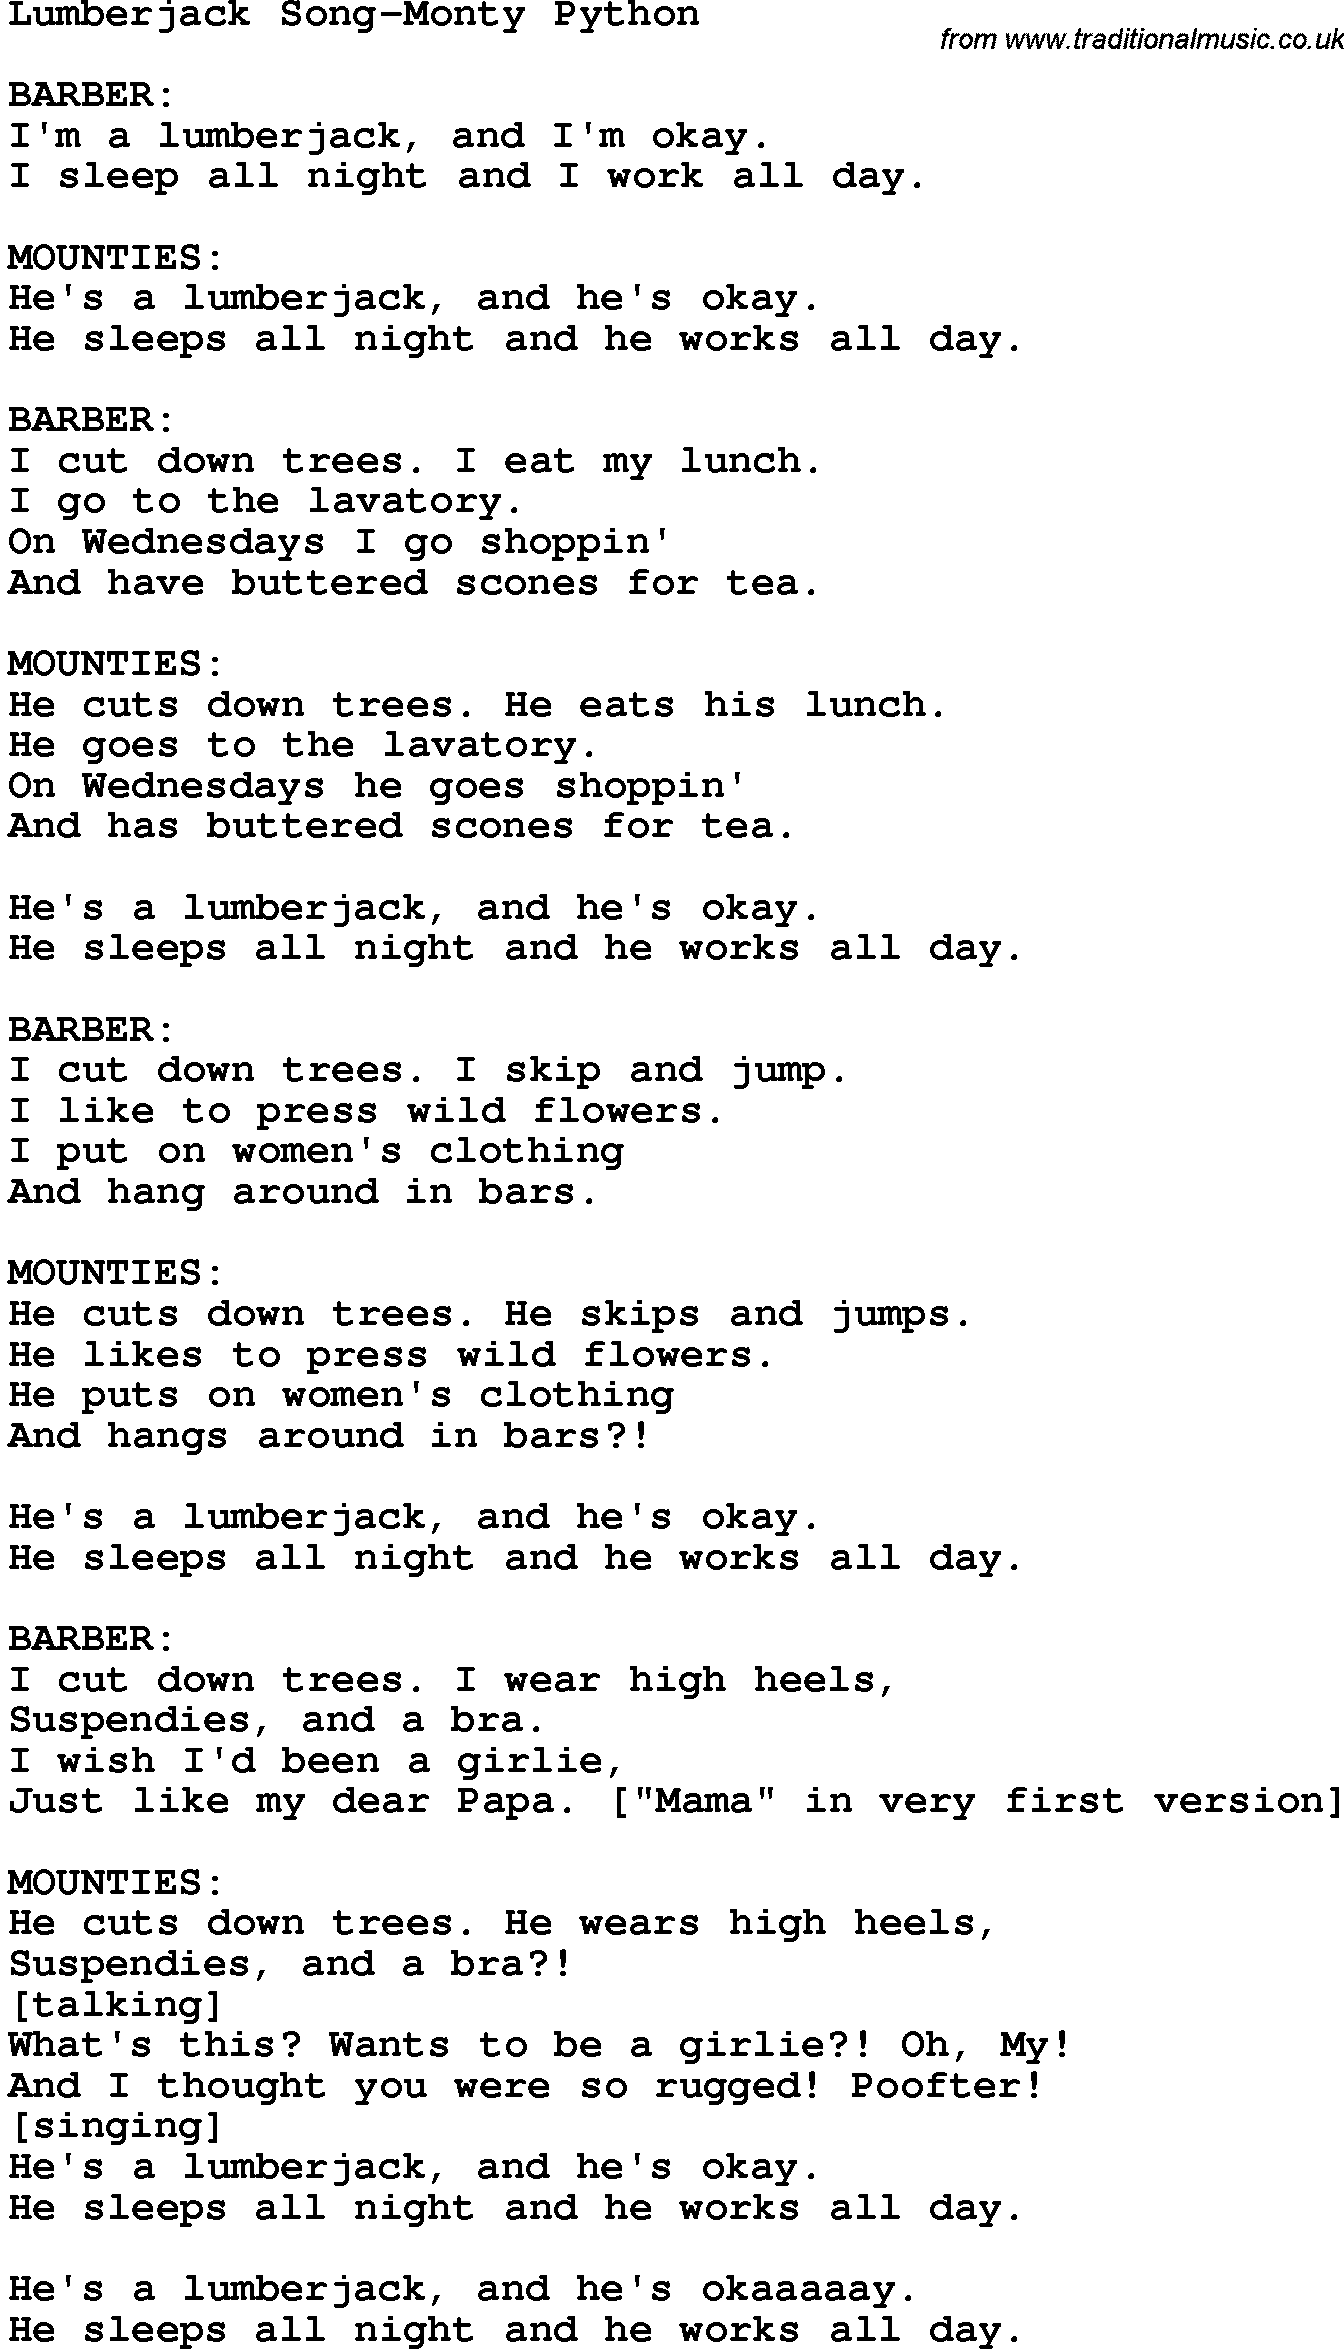 Novelty song: Lumberjack Song-Monty Python lyrics